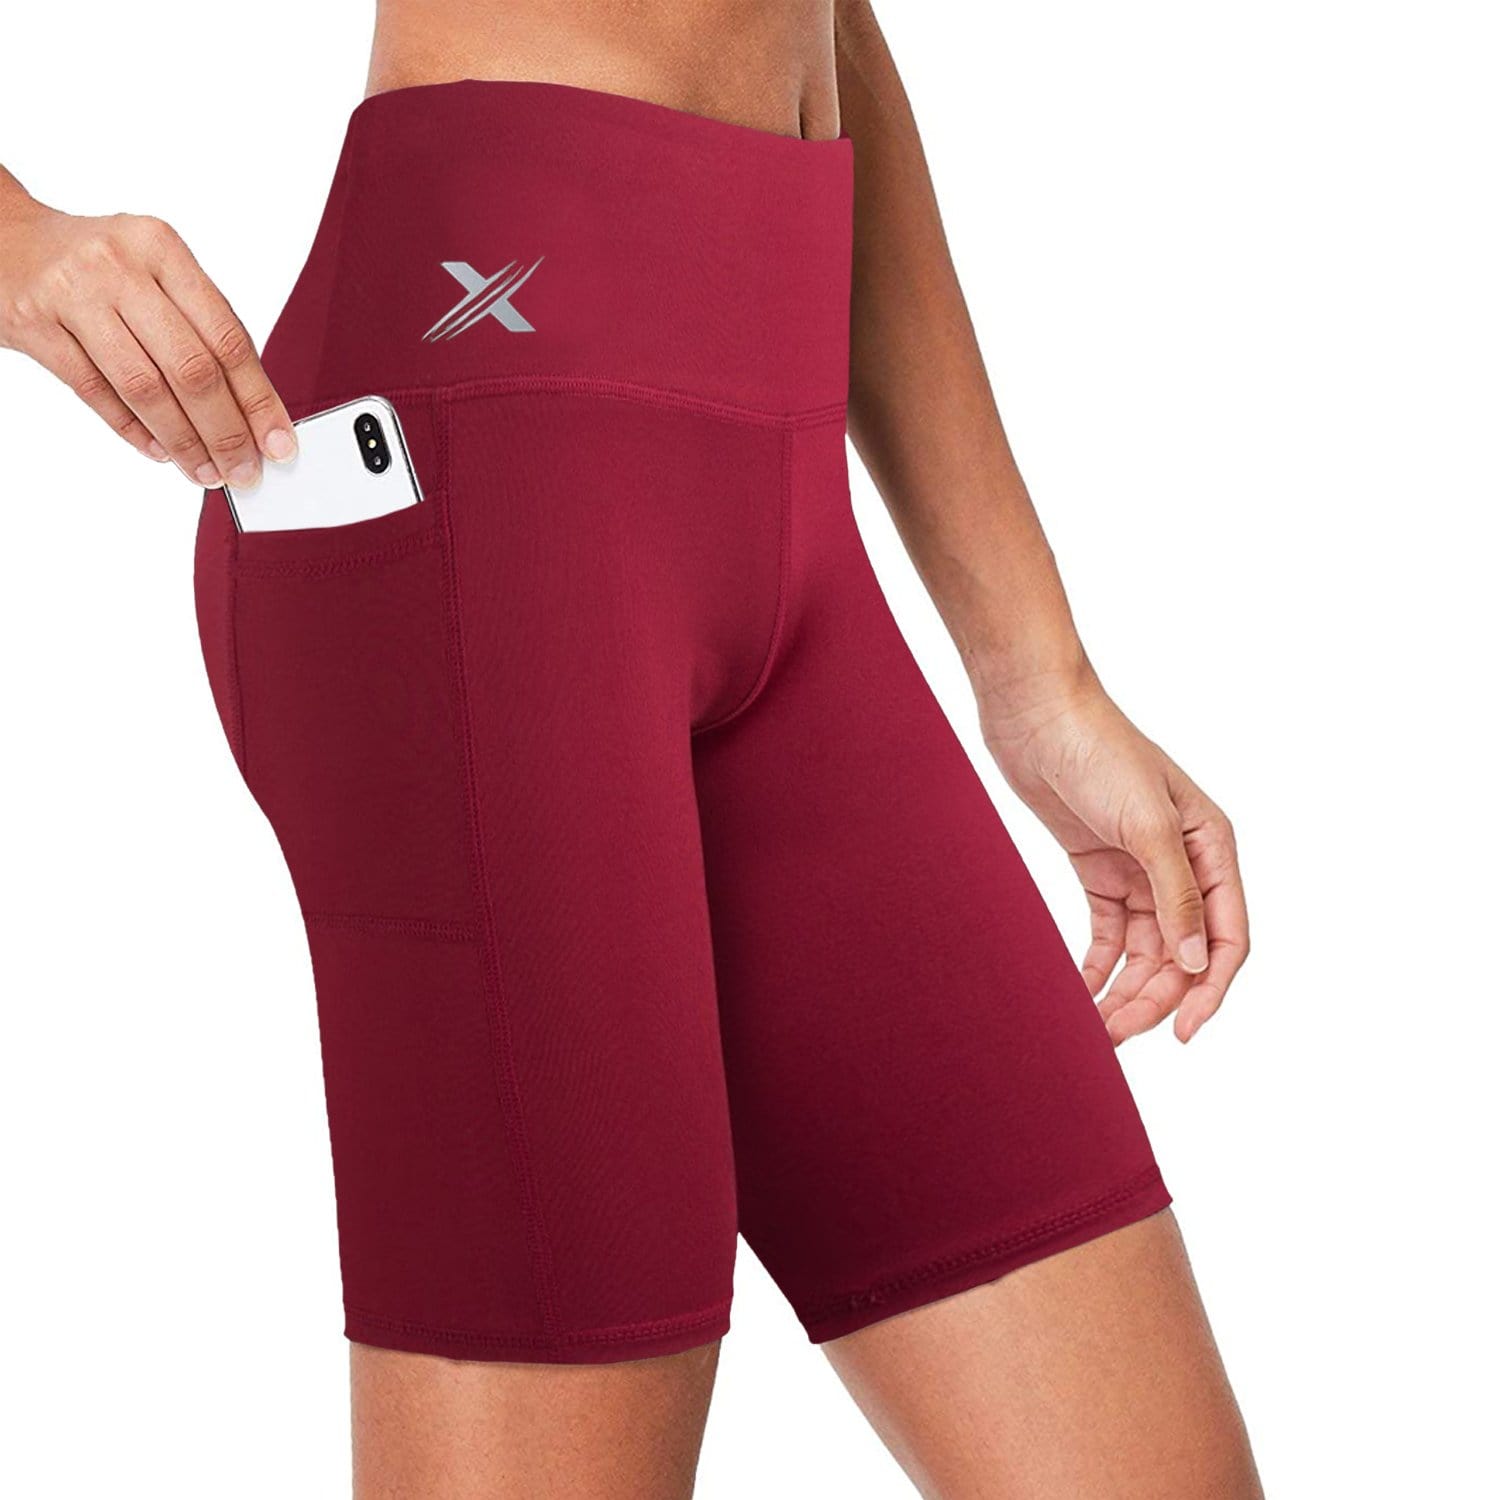  HIGHDAYS 5 Biker Shorts For Women - High Waist Tummy Control  Stretch Spandex Workout Shorts For Yoga Running Athletic Gym